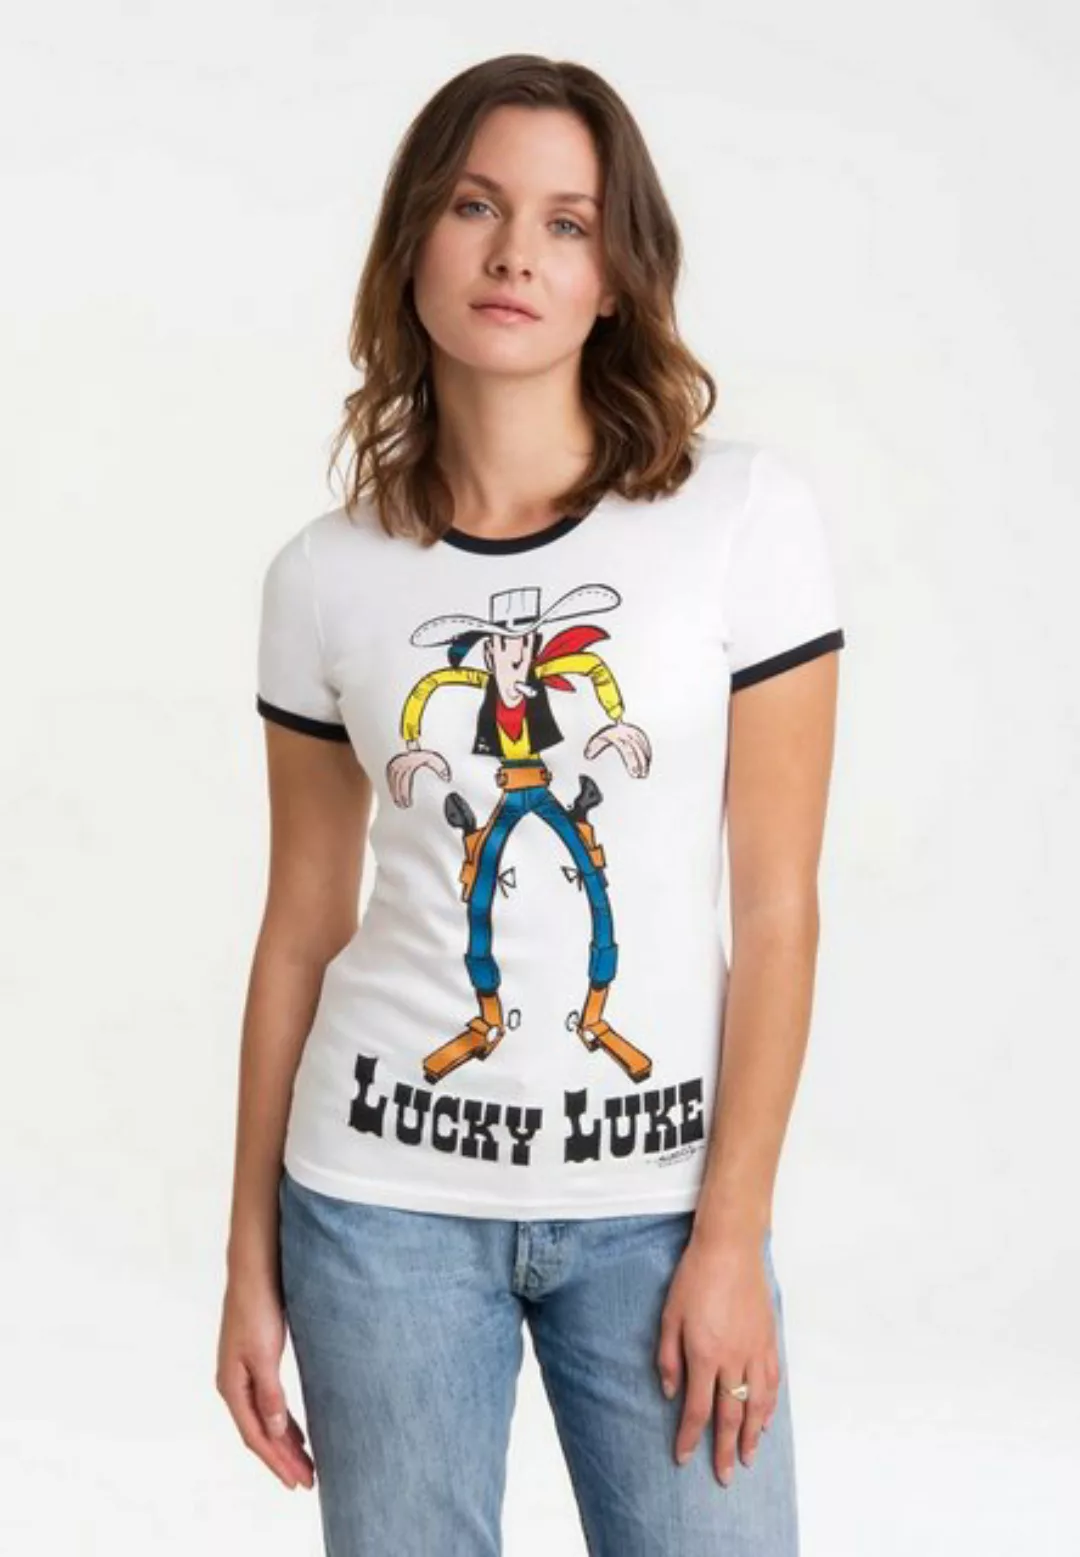 LOGOSHIRT T-Shirt Lucky Luke mit lizenziertem Originaldesign günstig online kaufen